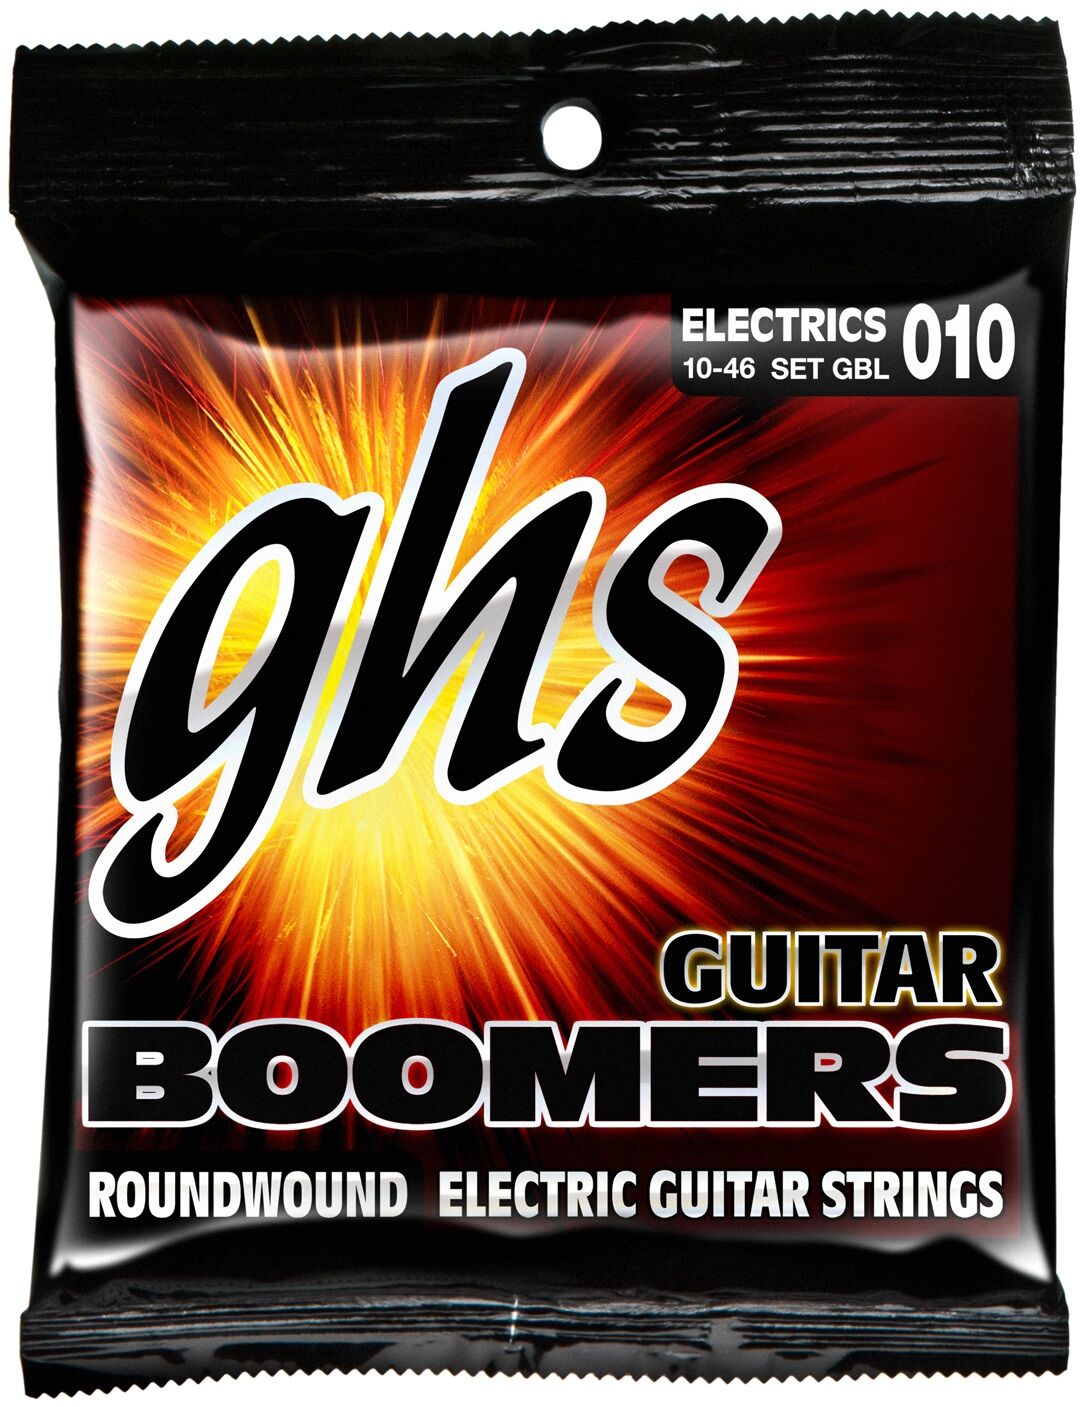 GHS STRINGS GBL GUITAR BOOMERS